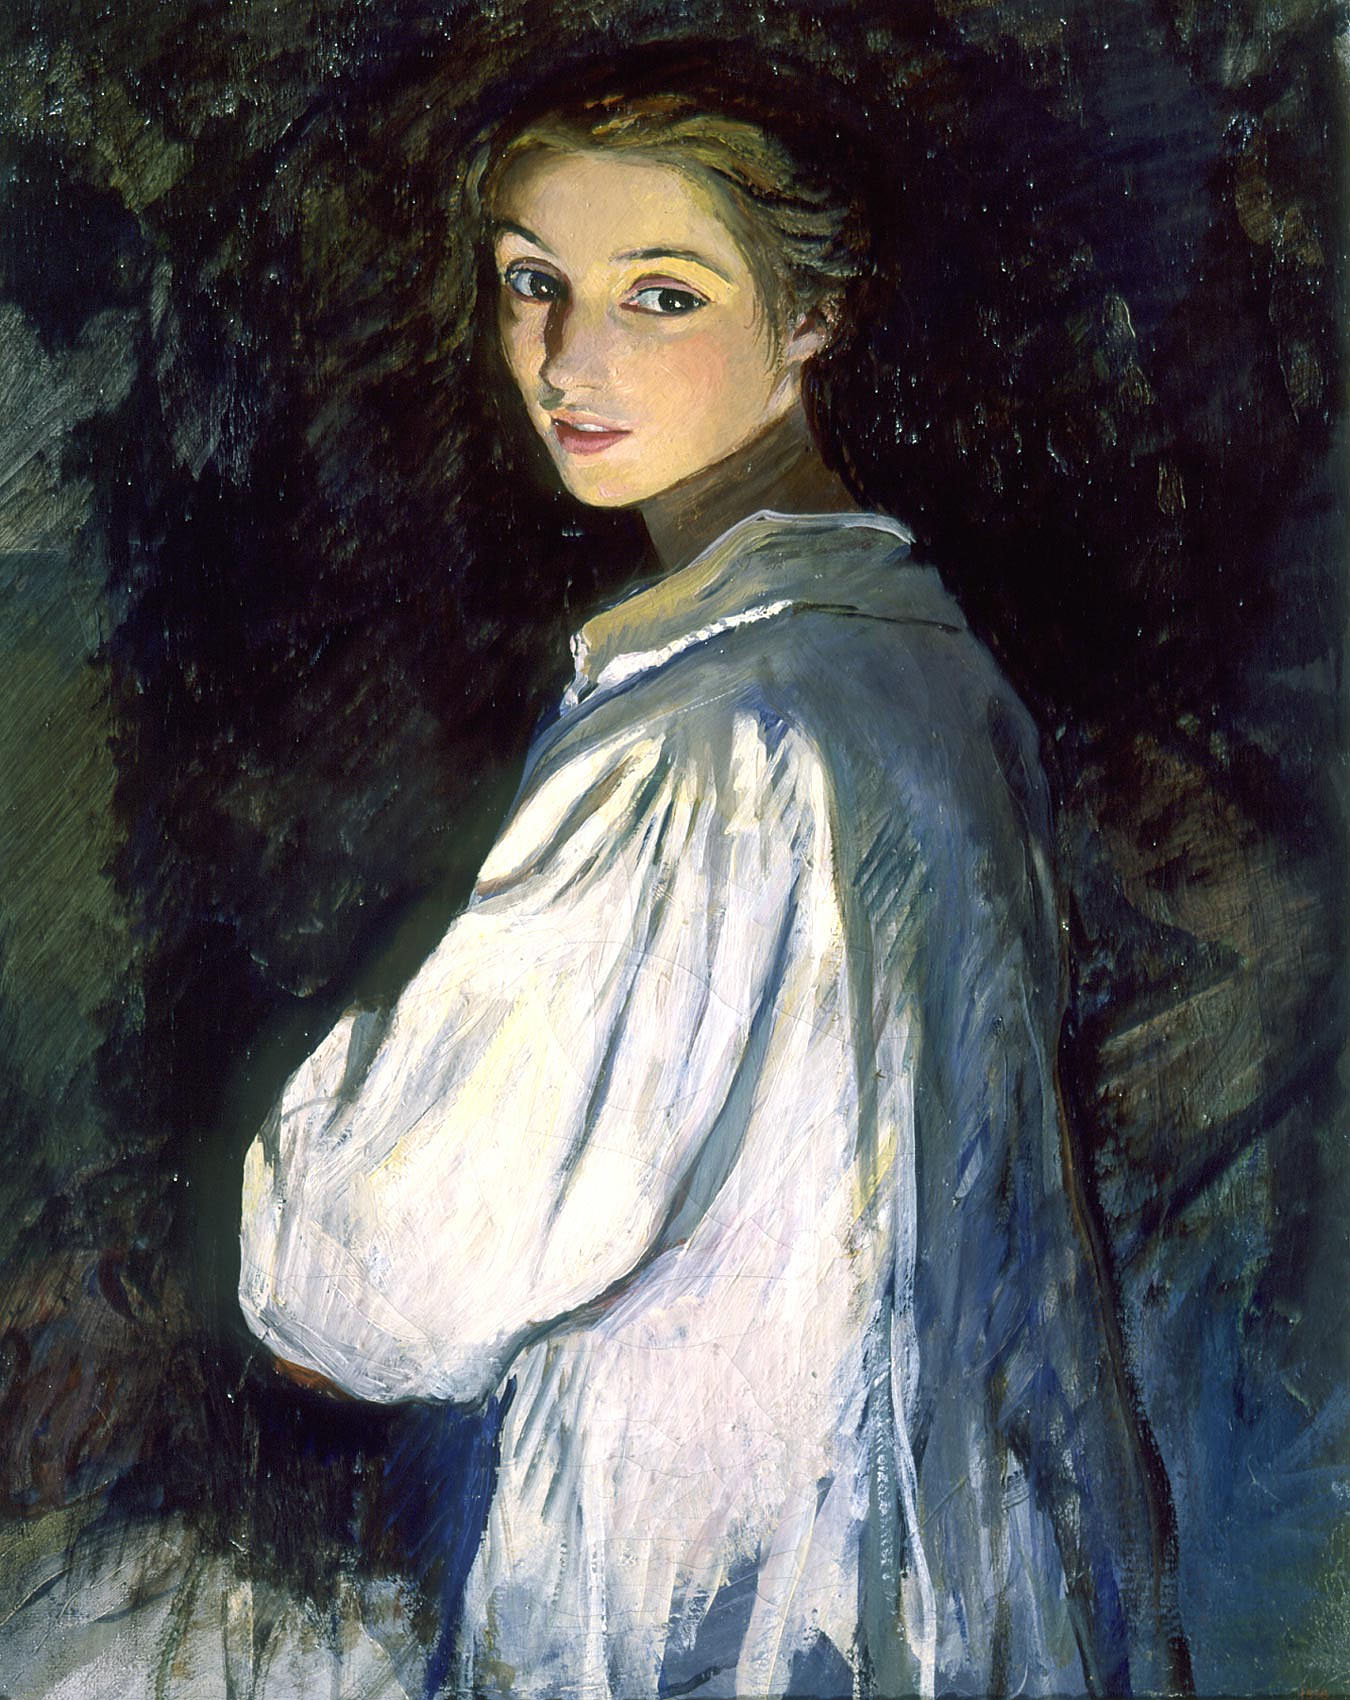 Girl with a Candle by Zinaida Serebriakova - 1911 State Russian Museum